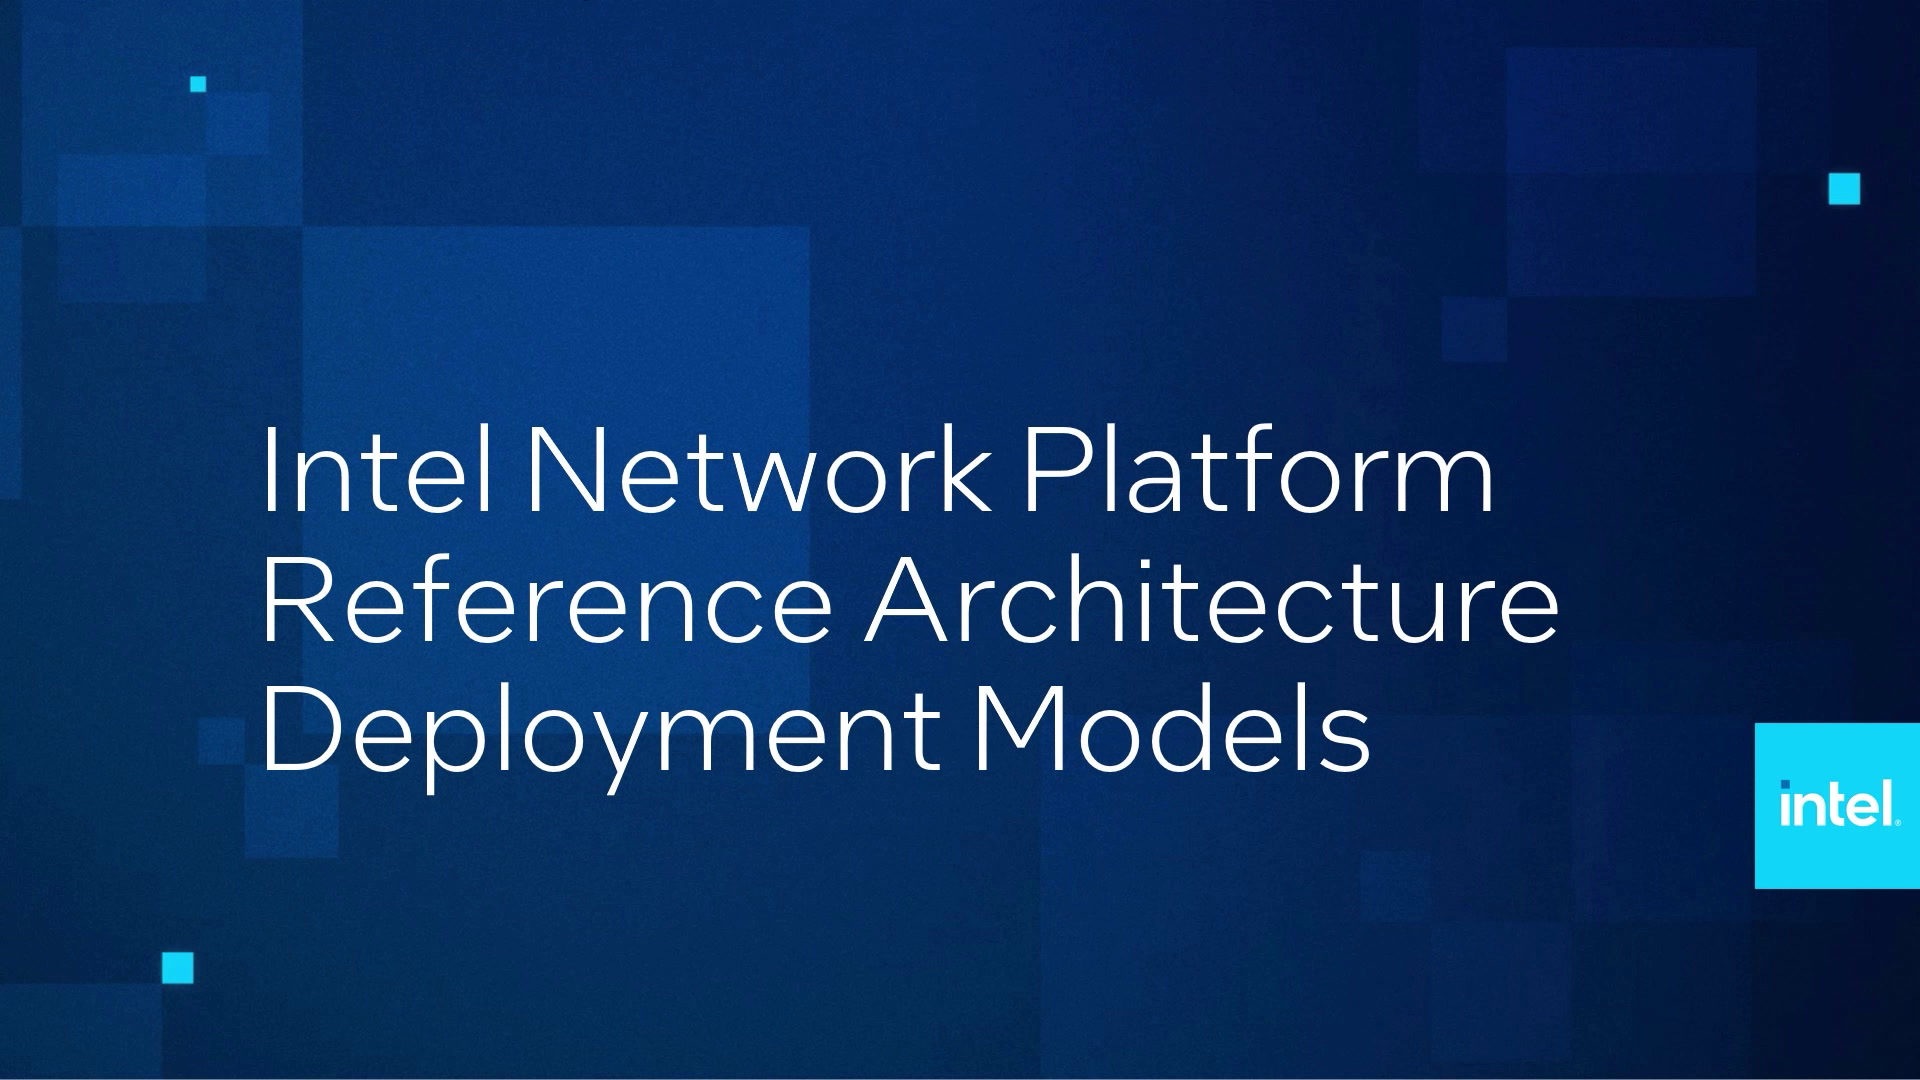 Intel Network Platform Reference Architecture Deployment Models